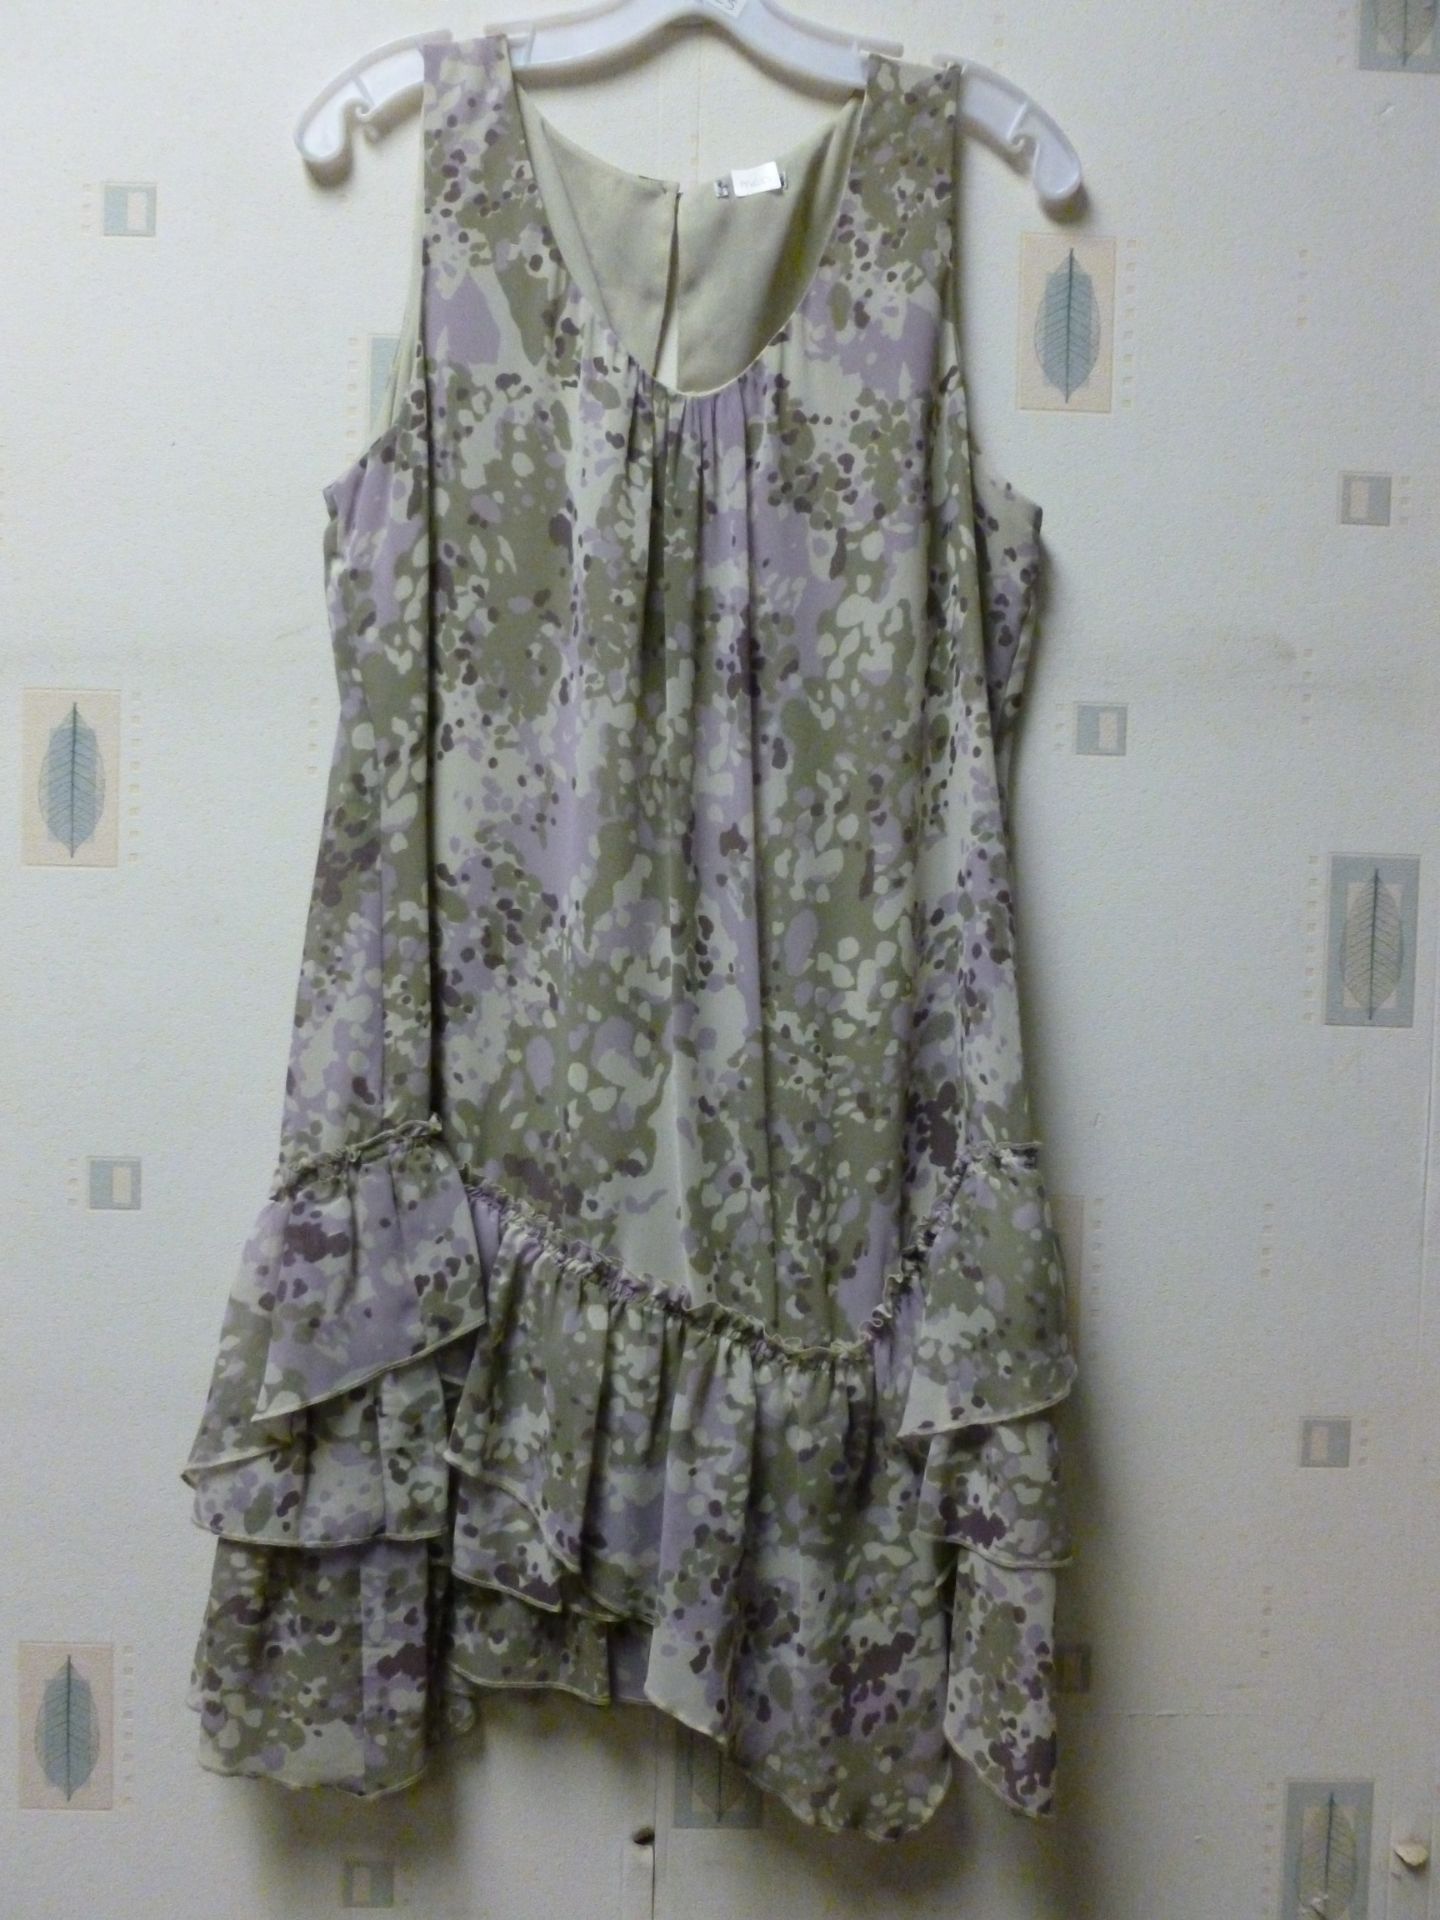 Camo Print Dress RRP £24.99 Size 12